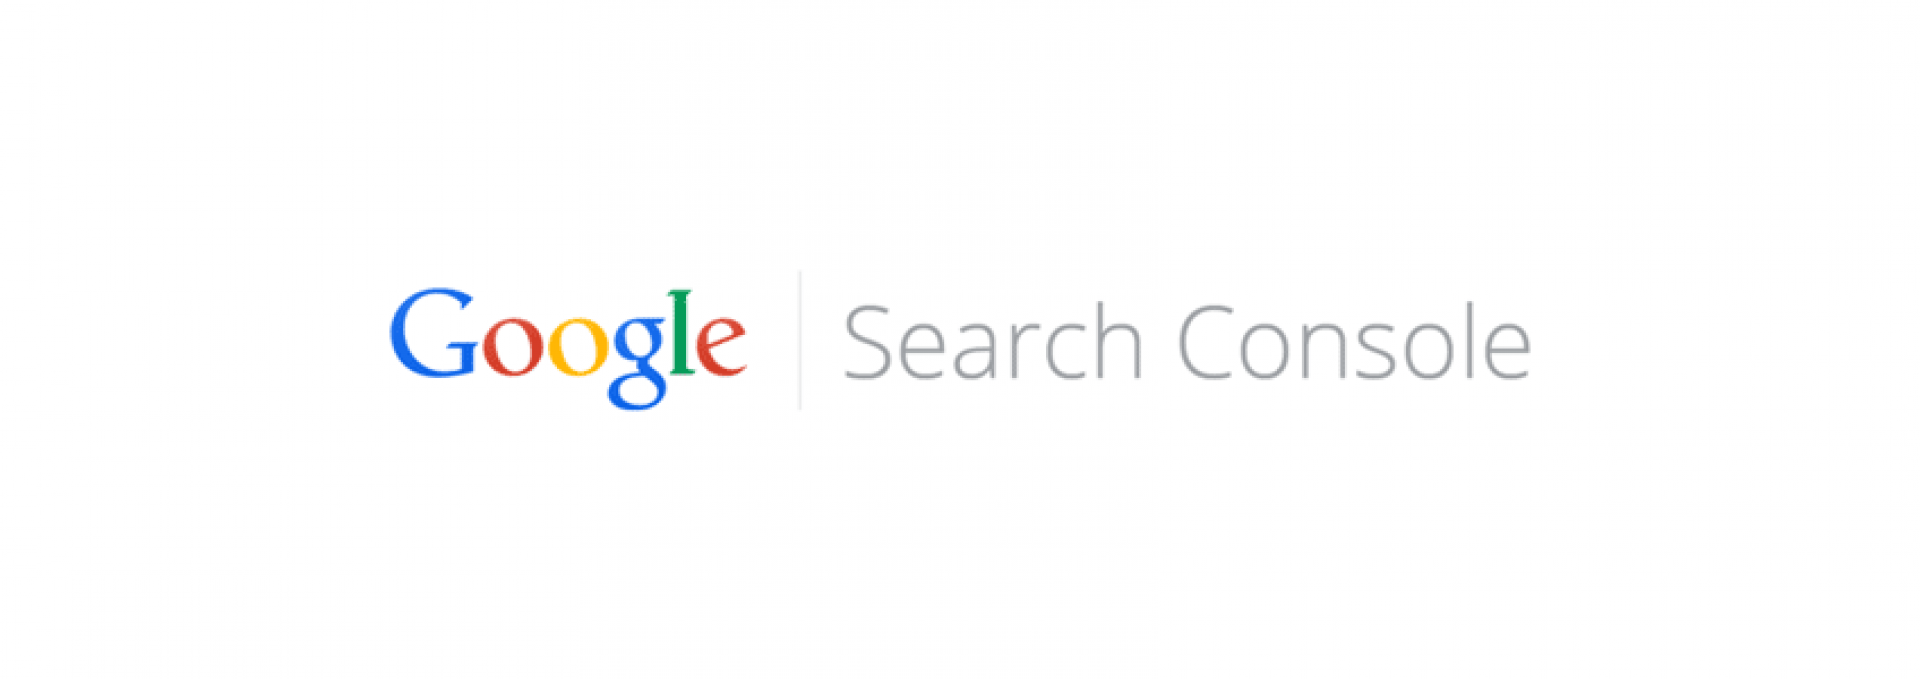 Google search Console. Гугл Серч консоль. Google searching.